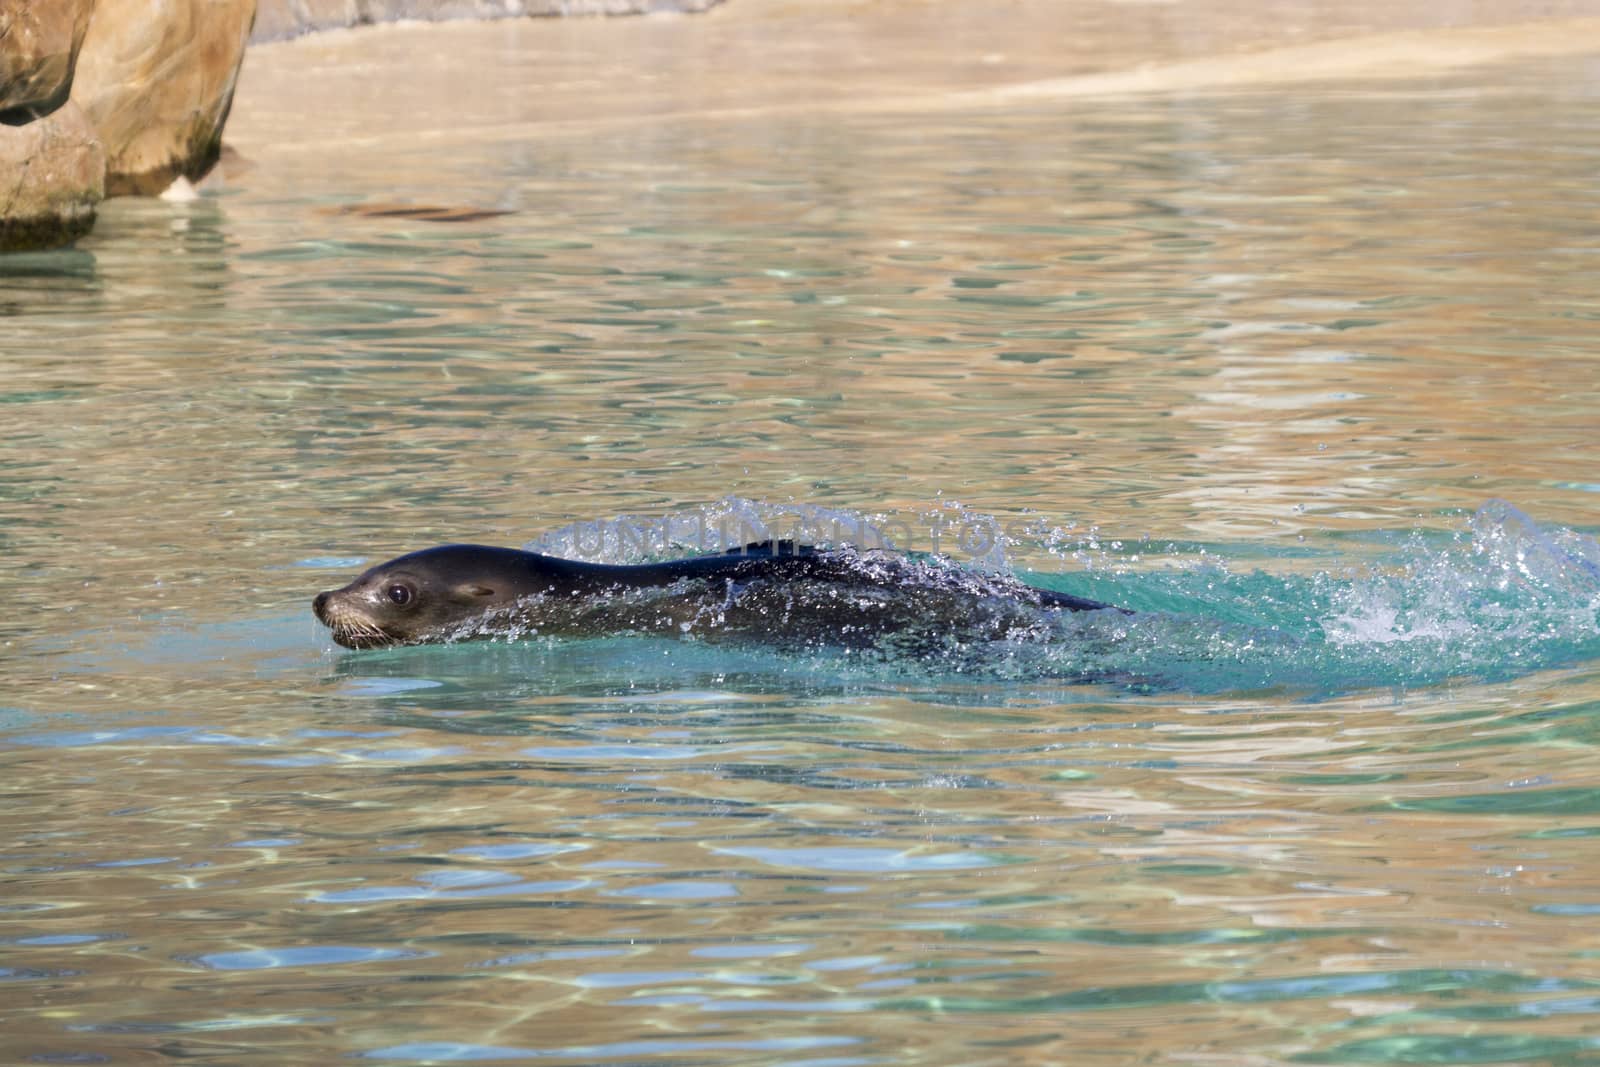 Sea Lion swimming  in the water closeup